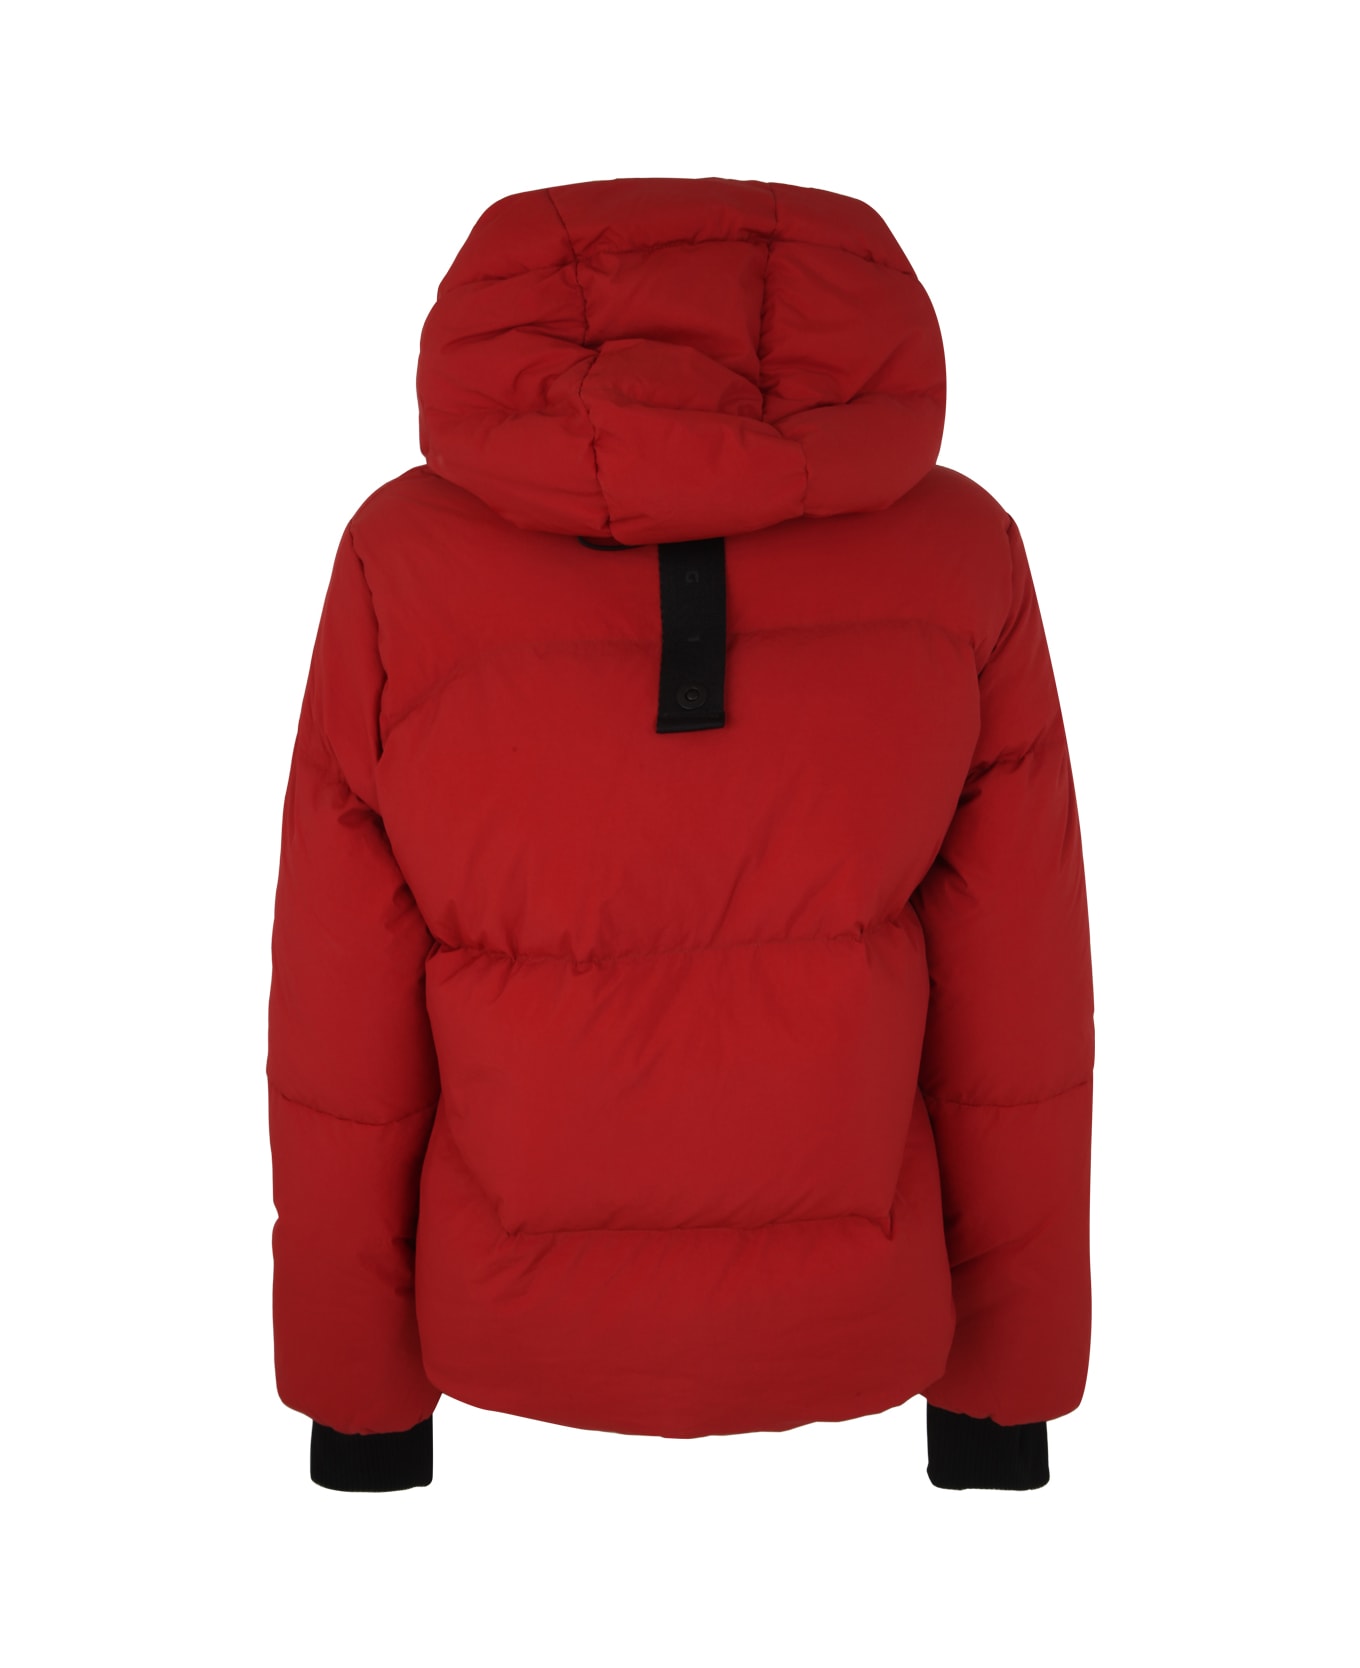 JG1 Padded Jacket With Hood - Red Burn